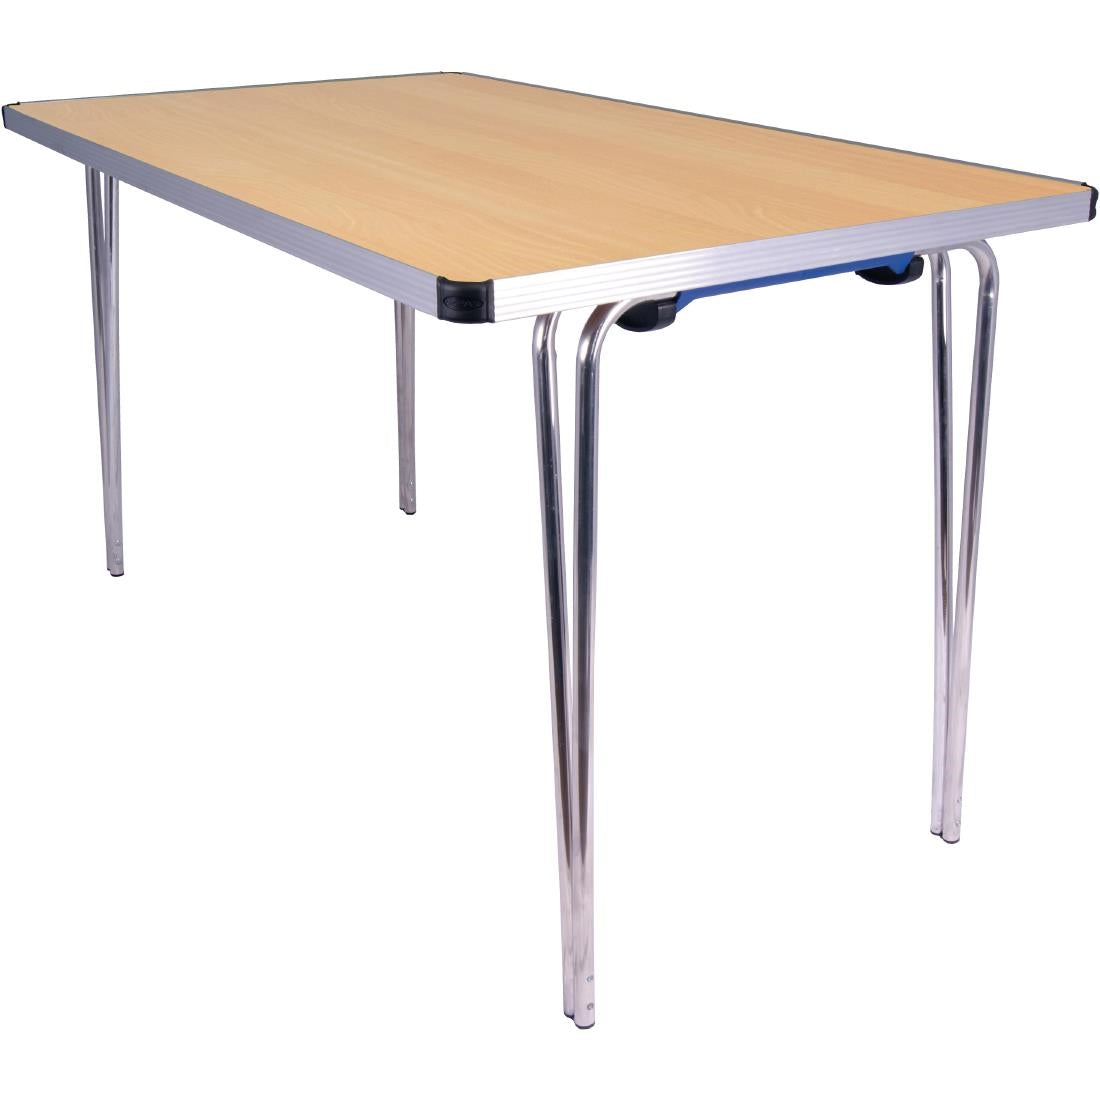 DM602 Gopak Contour Folding Table Beech 4ft JD Catering Equipment Solutions Ltd